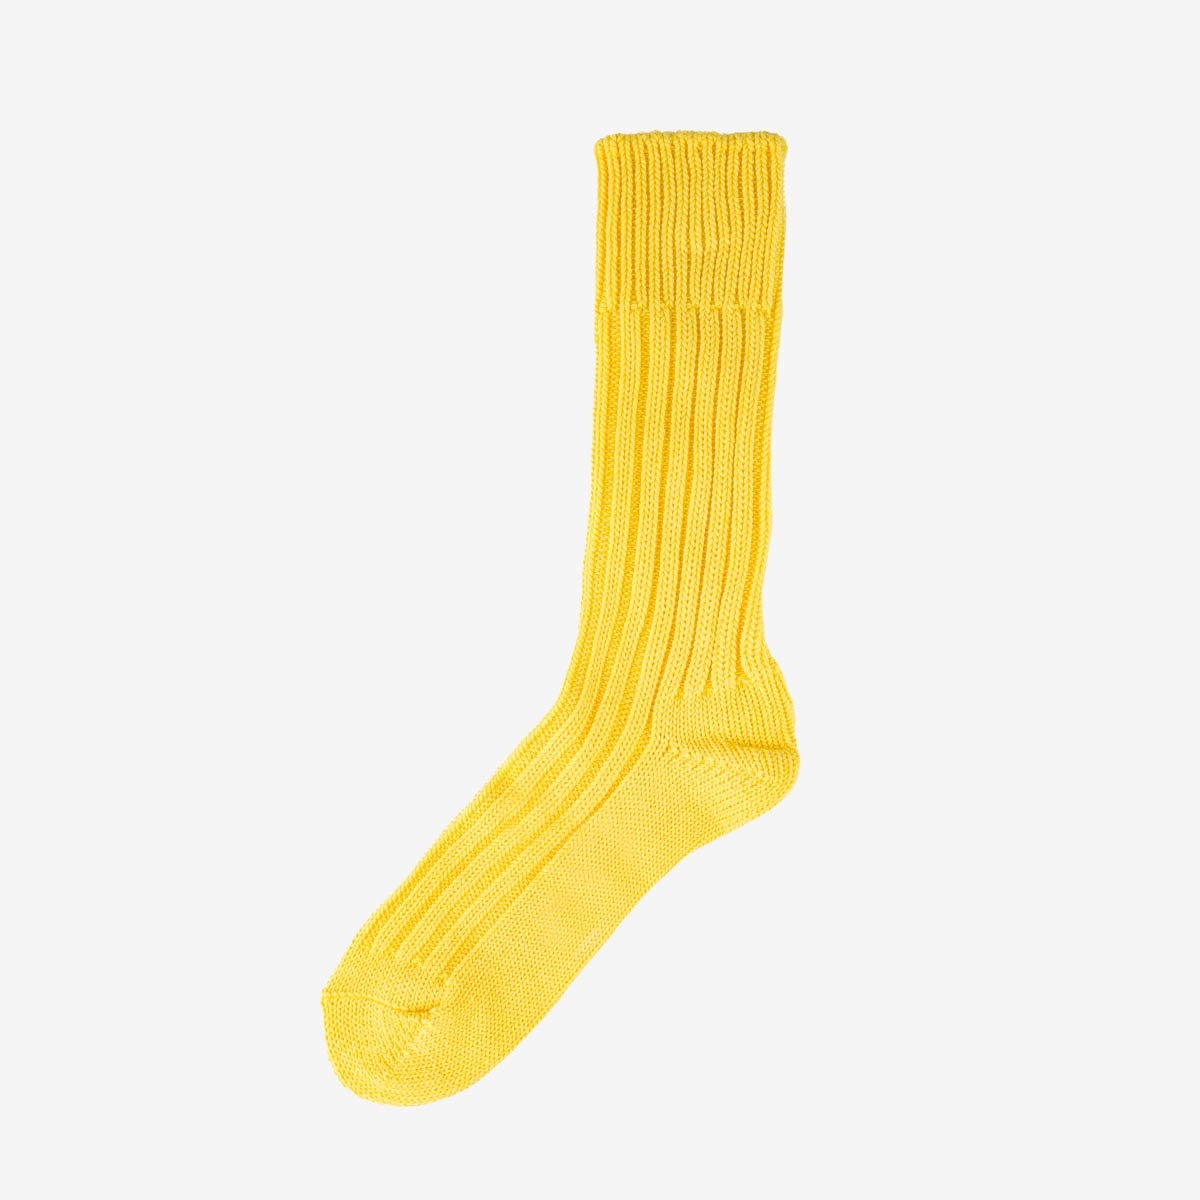 DEC-CAS-N-YEL Decka Cased Heavyweight Plain Socks - Neon Yellow - 2